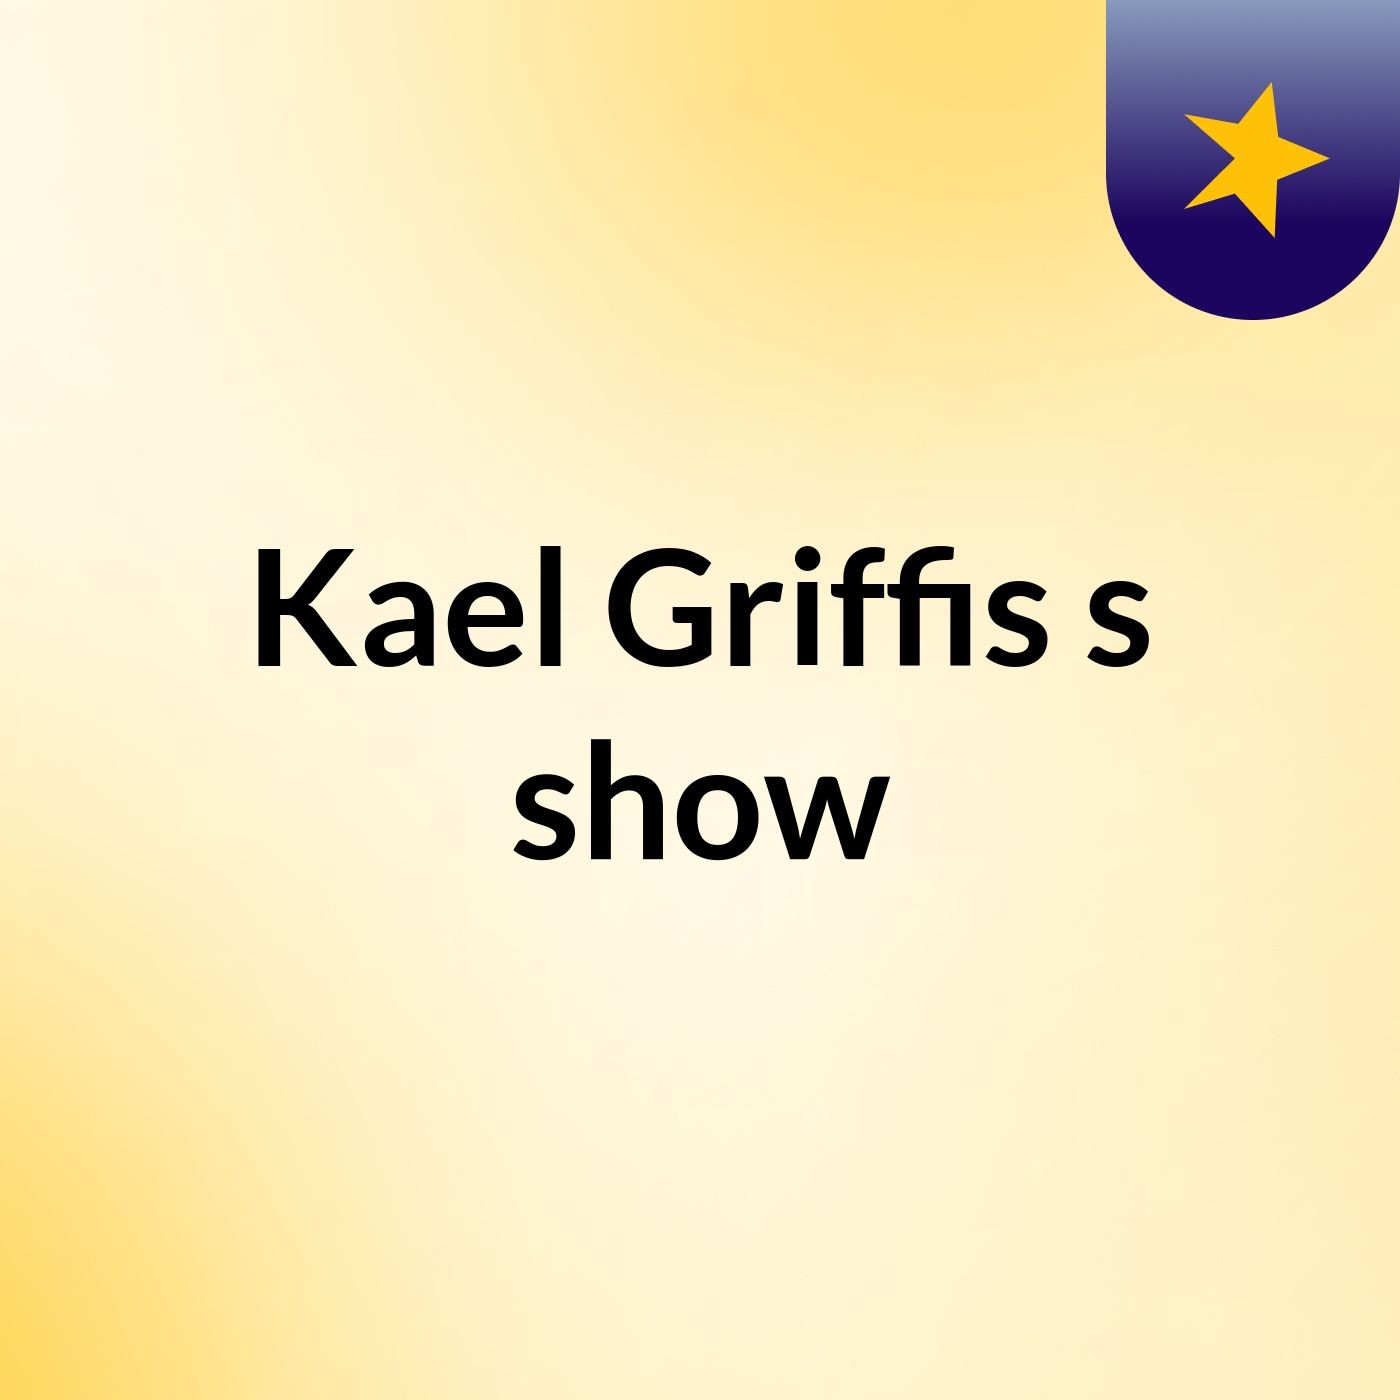 Kael Griffis's show